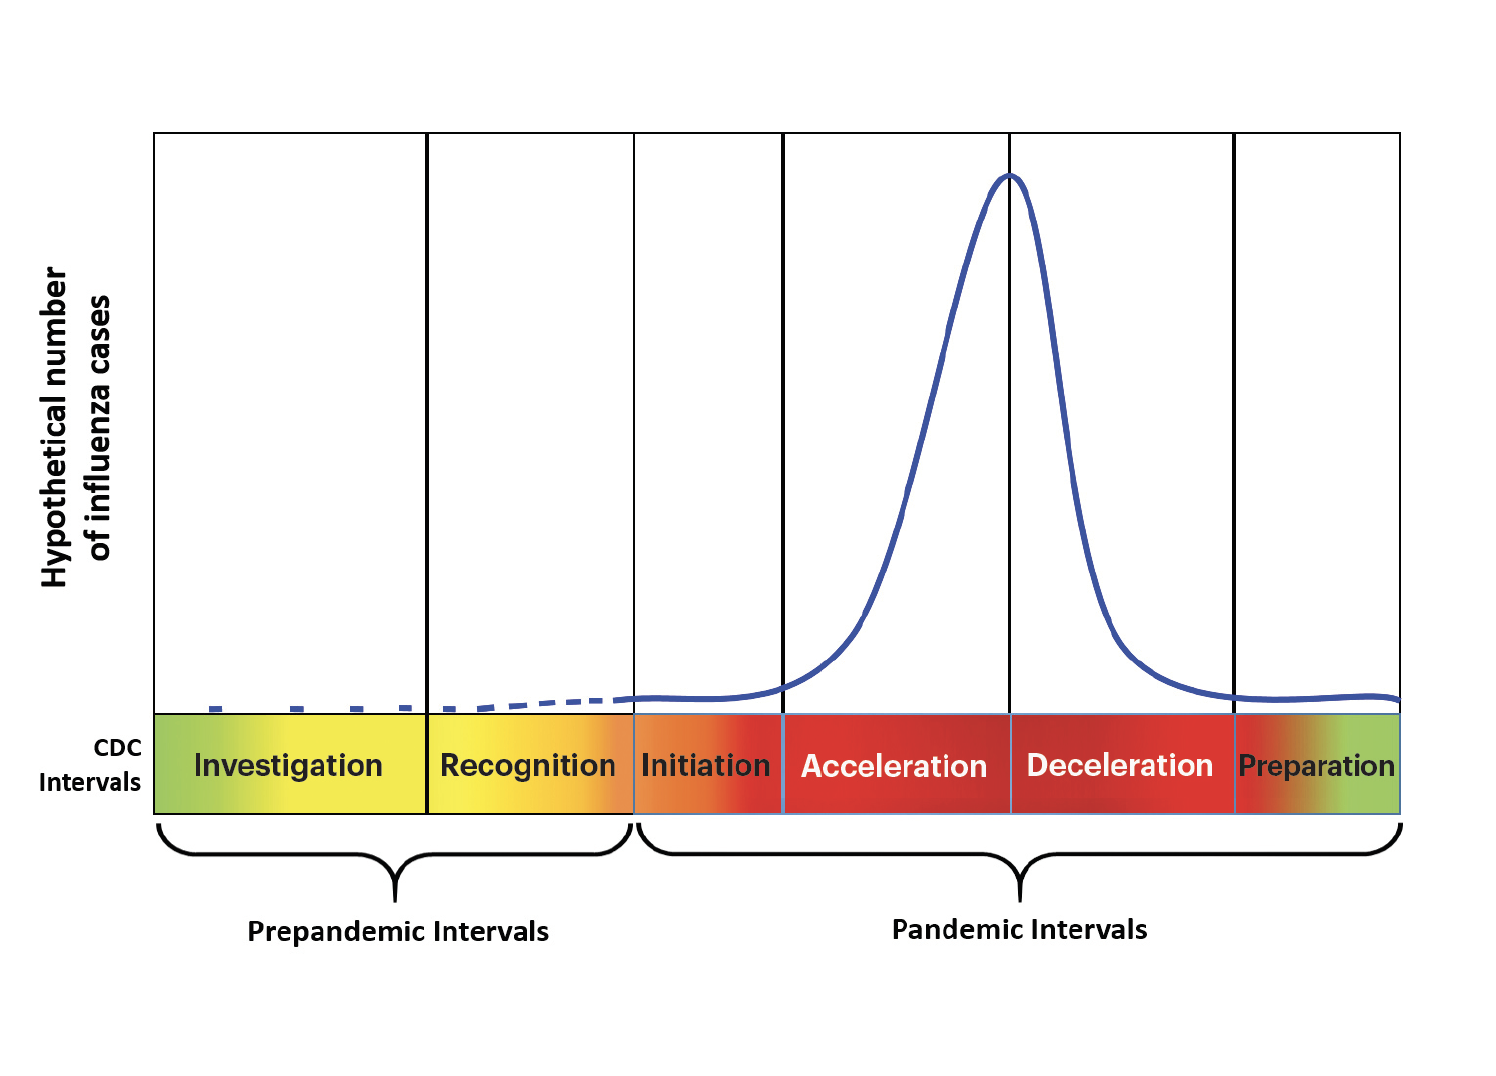 Figure 3: Preparedness and Response Framework for Novel Influenza A Virus Pandemics: CDC Intervals